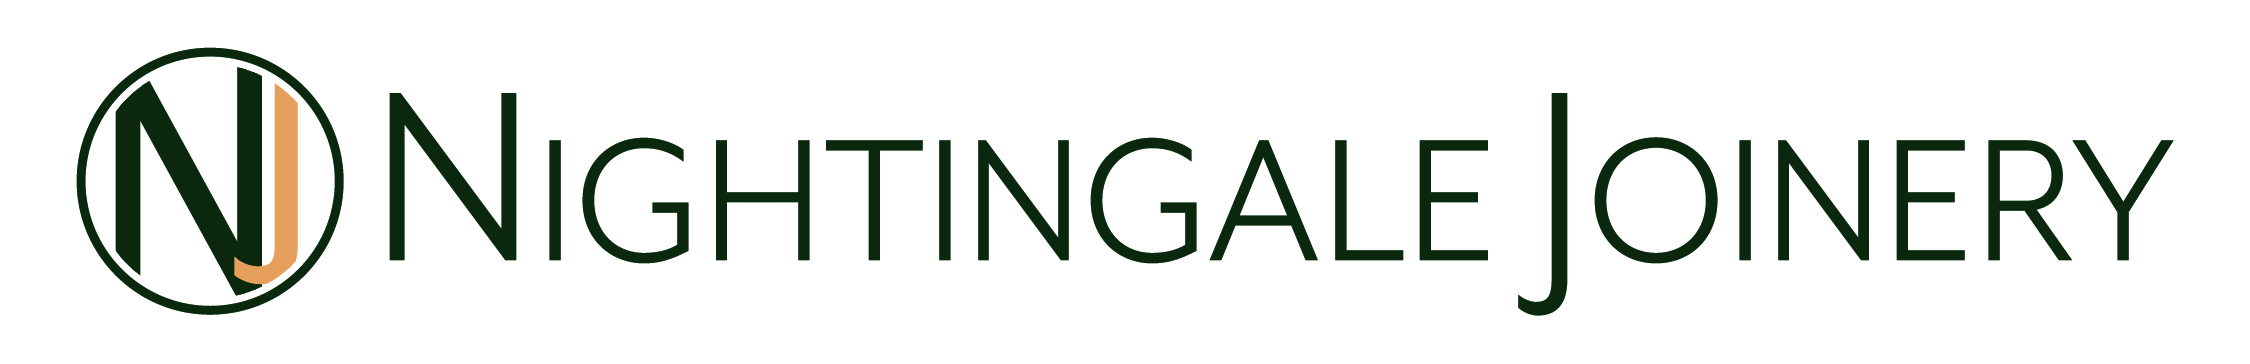 Nightingale Joinery LTD Logo